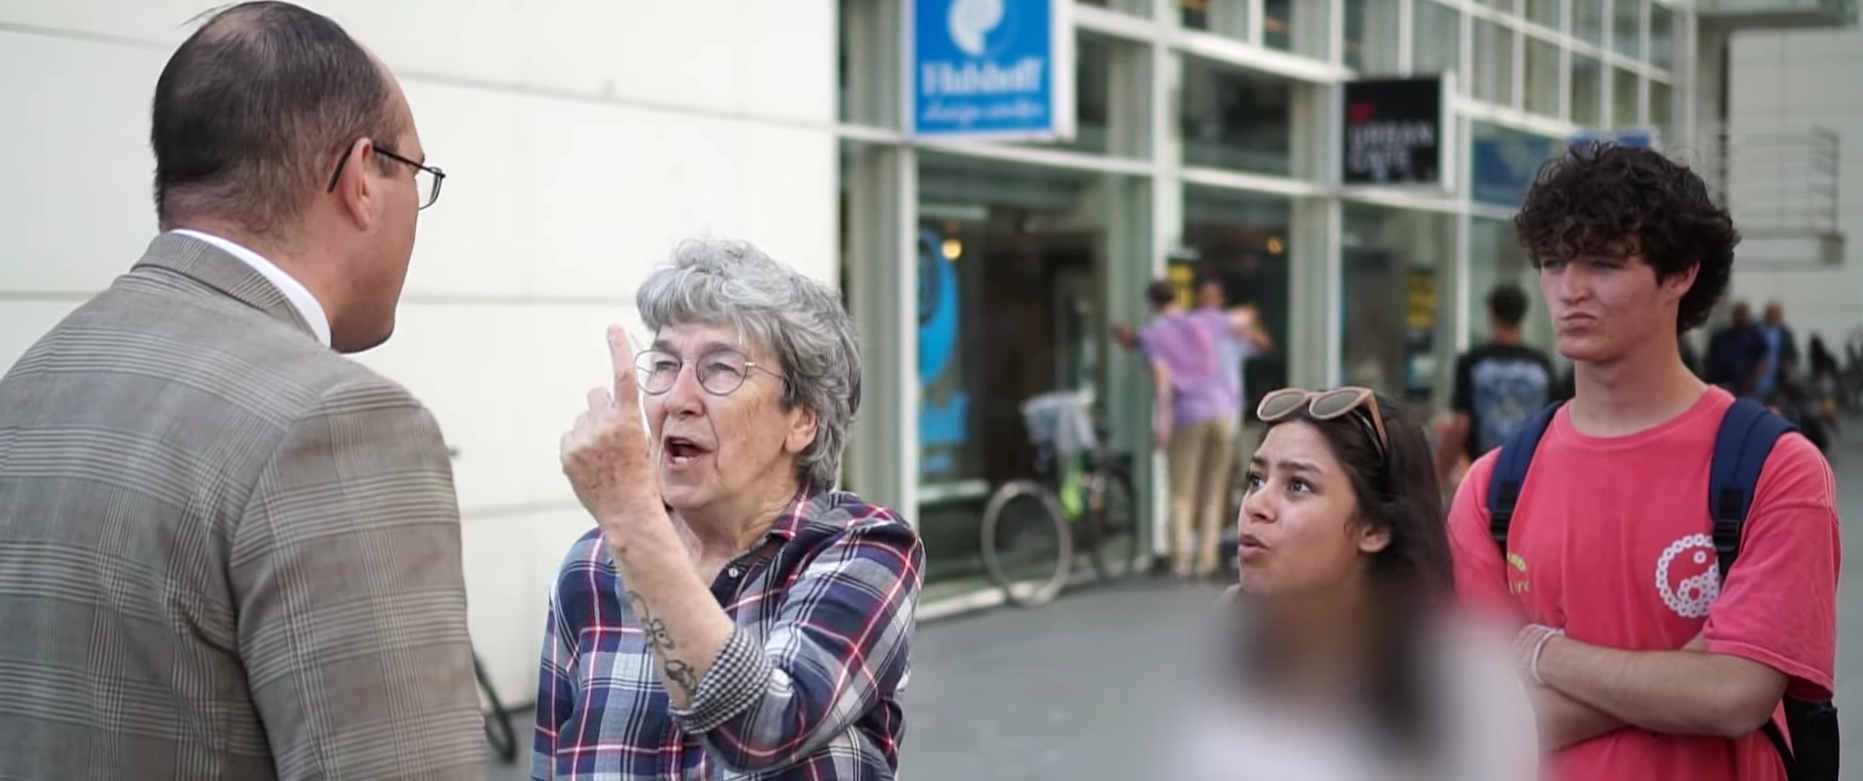 Pro-life straatcampagne in Den Haag: ‘Dood die ****ing baby’s!’